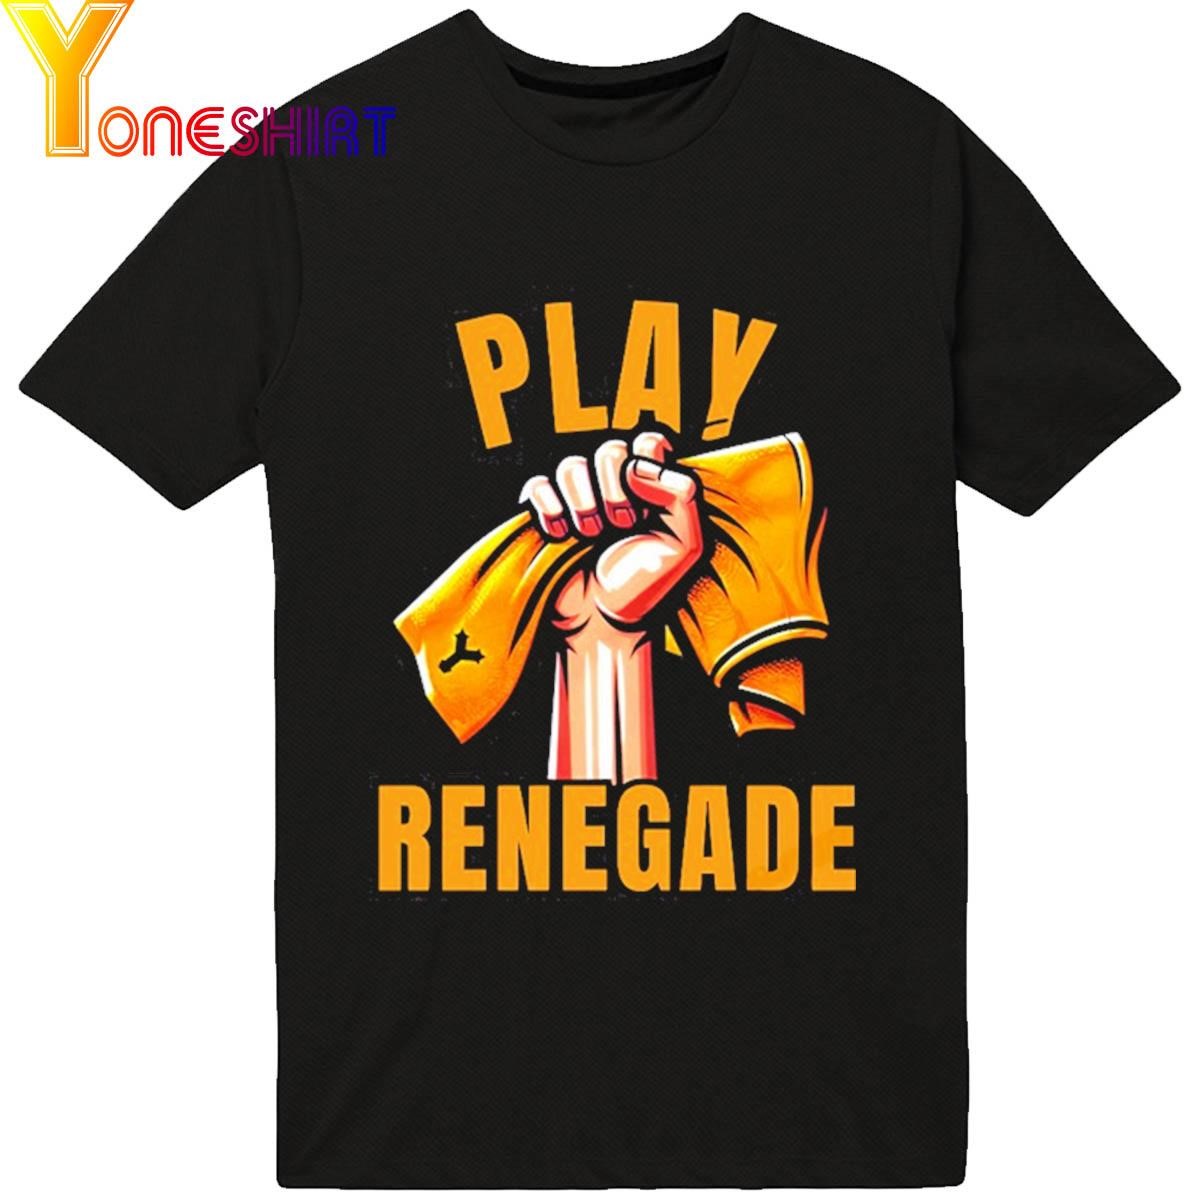 Play renegade yinzz shirt